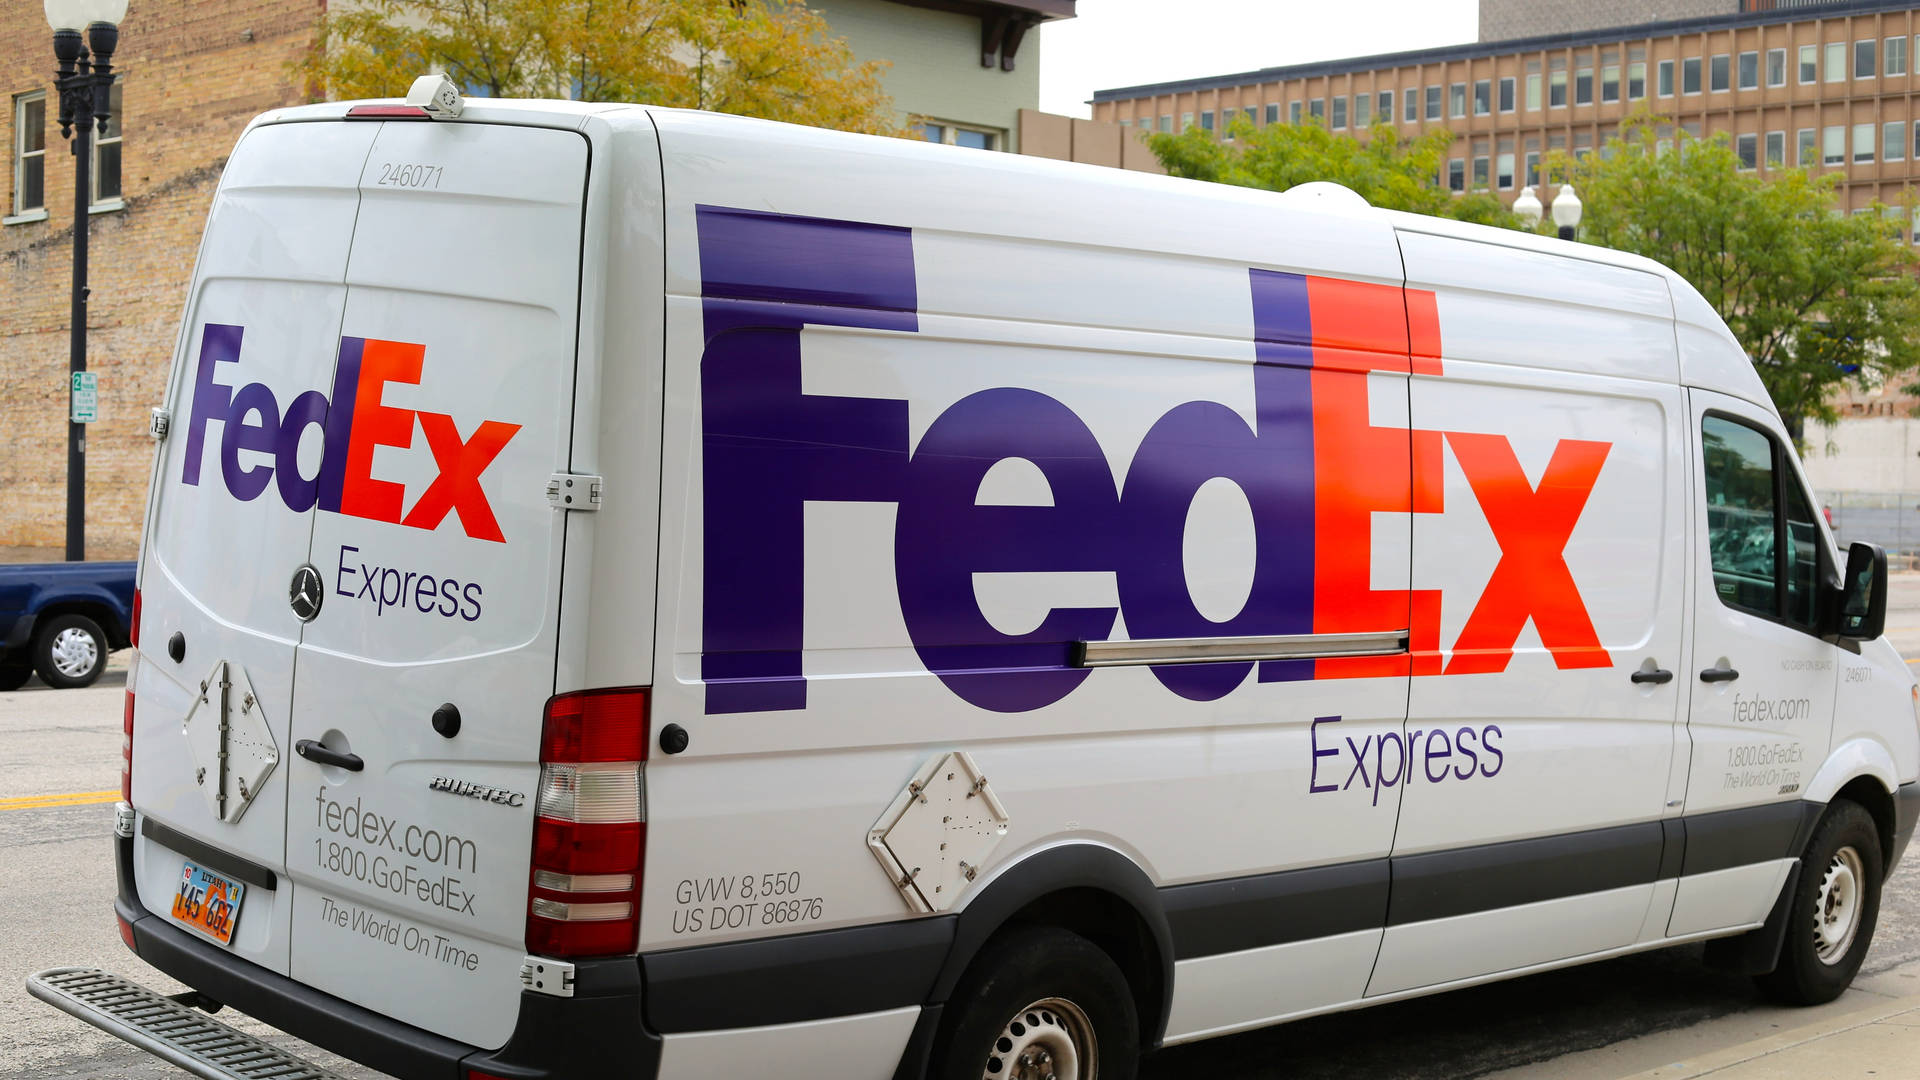 Fedex Express Delivery Van Background